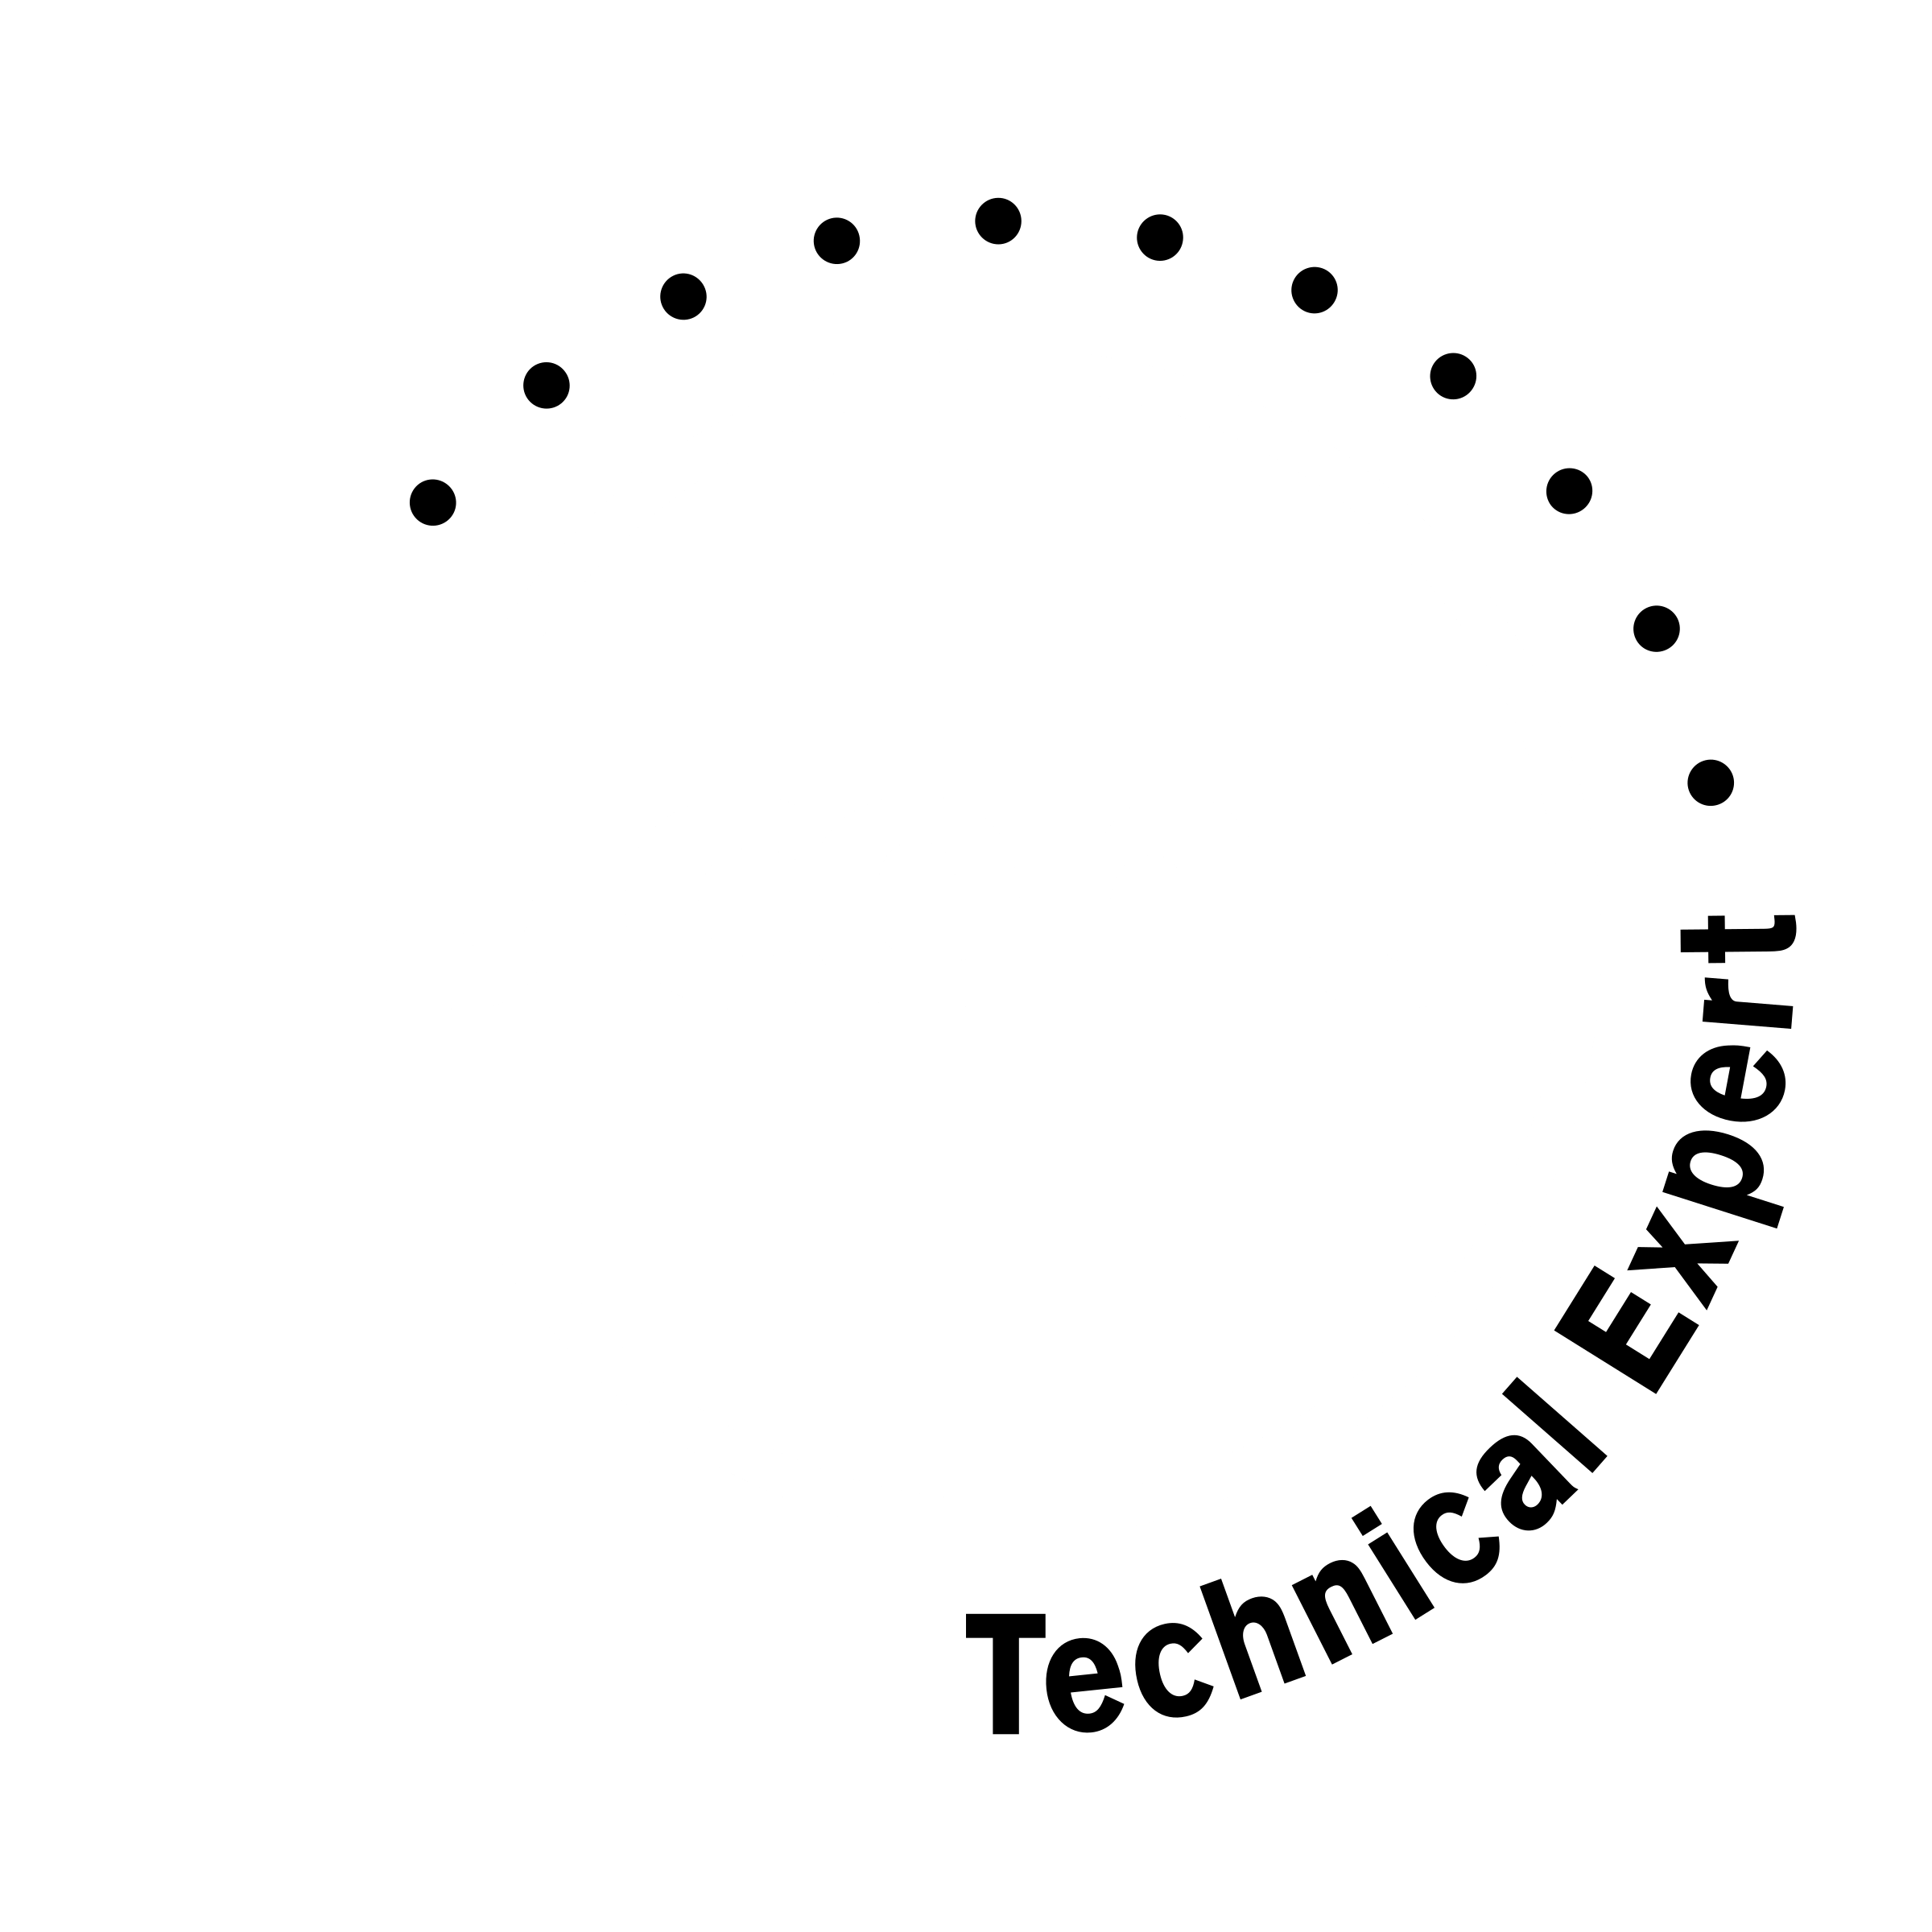 Lucent Logo - Lucent Logo PNG Transparent & SVG Vector - Freebie Supply